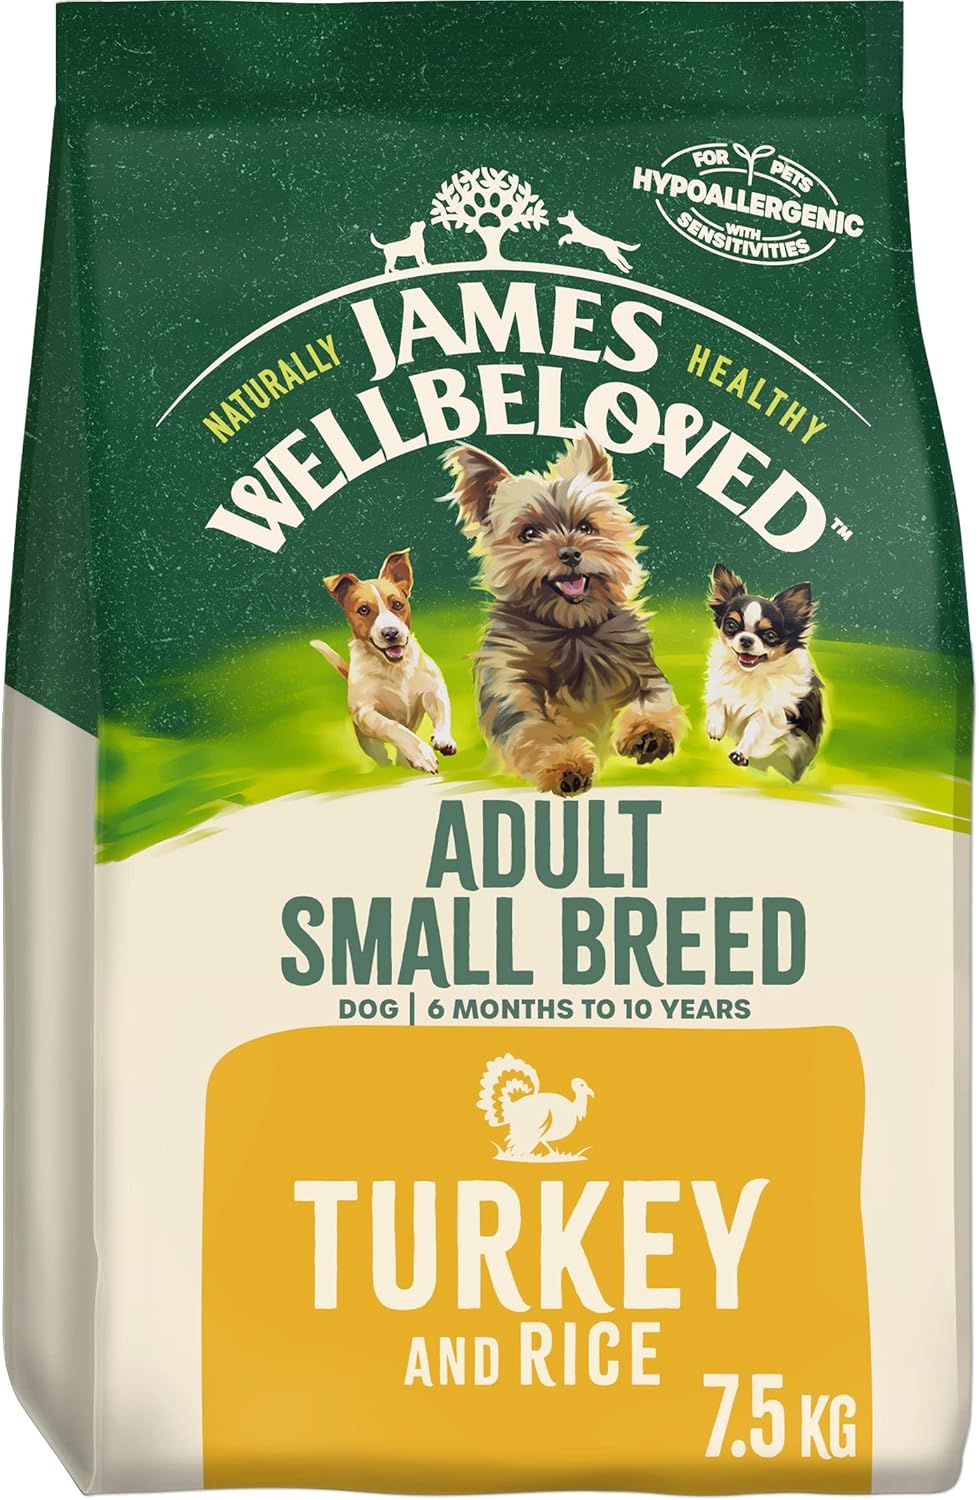 James Wellbeloved Adult Small Breed Turkey & Rice 7.5 kg Bag, Hypoallergenic Dry Dog Food?02JWSBT2